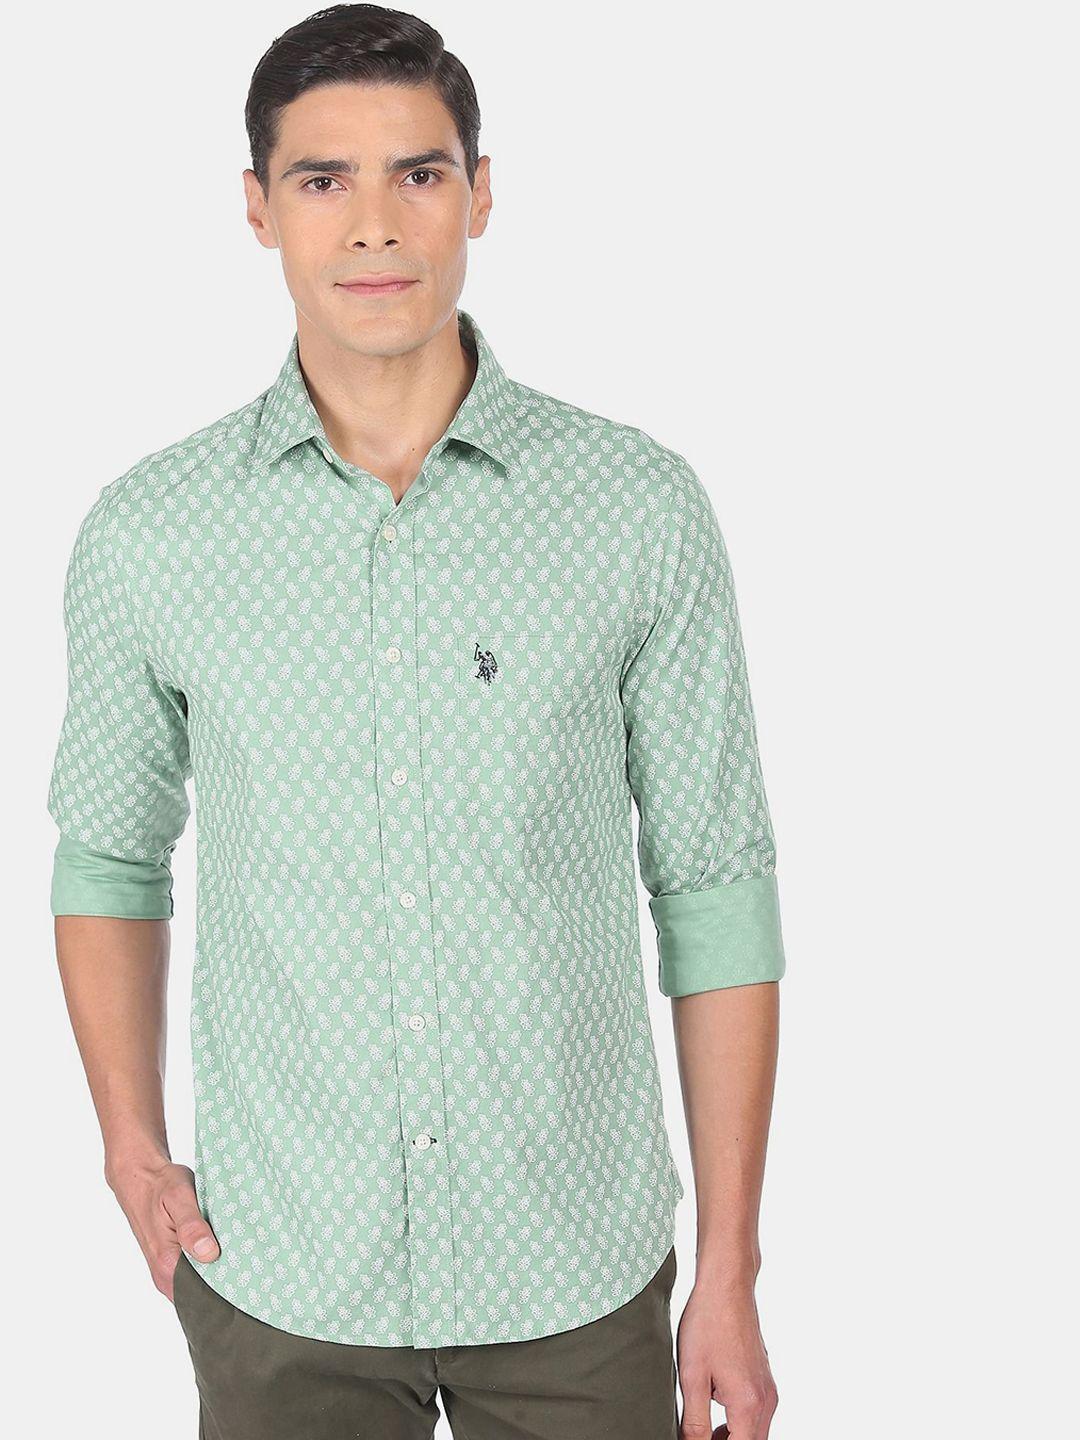 u s polo assn men green regular fit floral printed cotton casual shirt